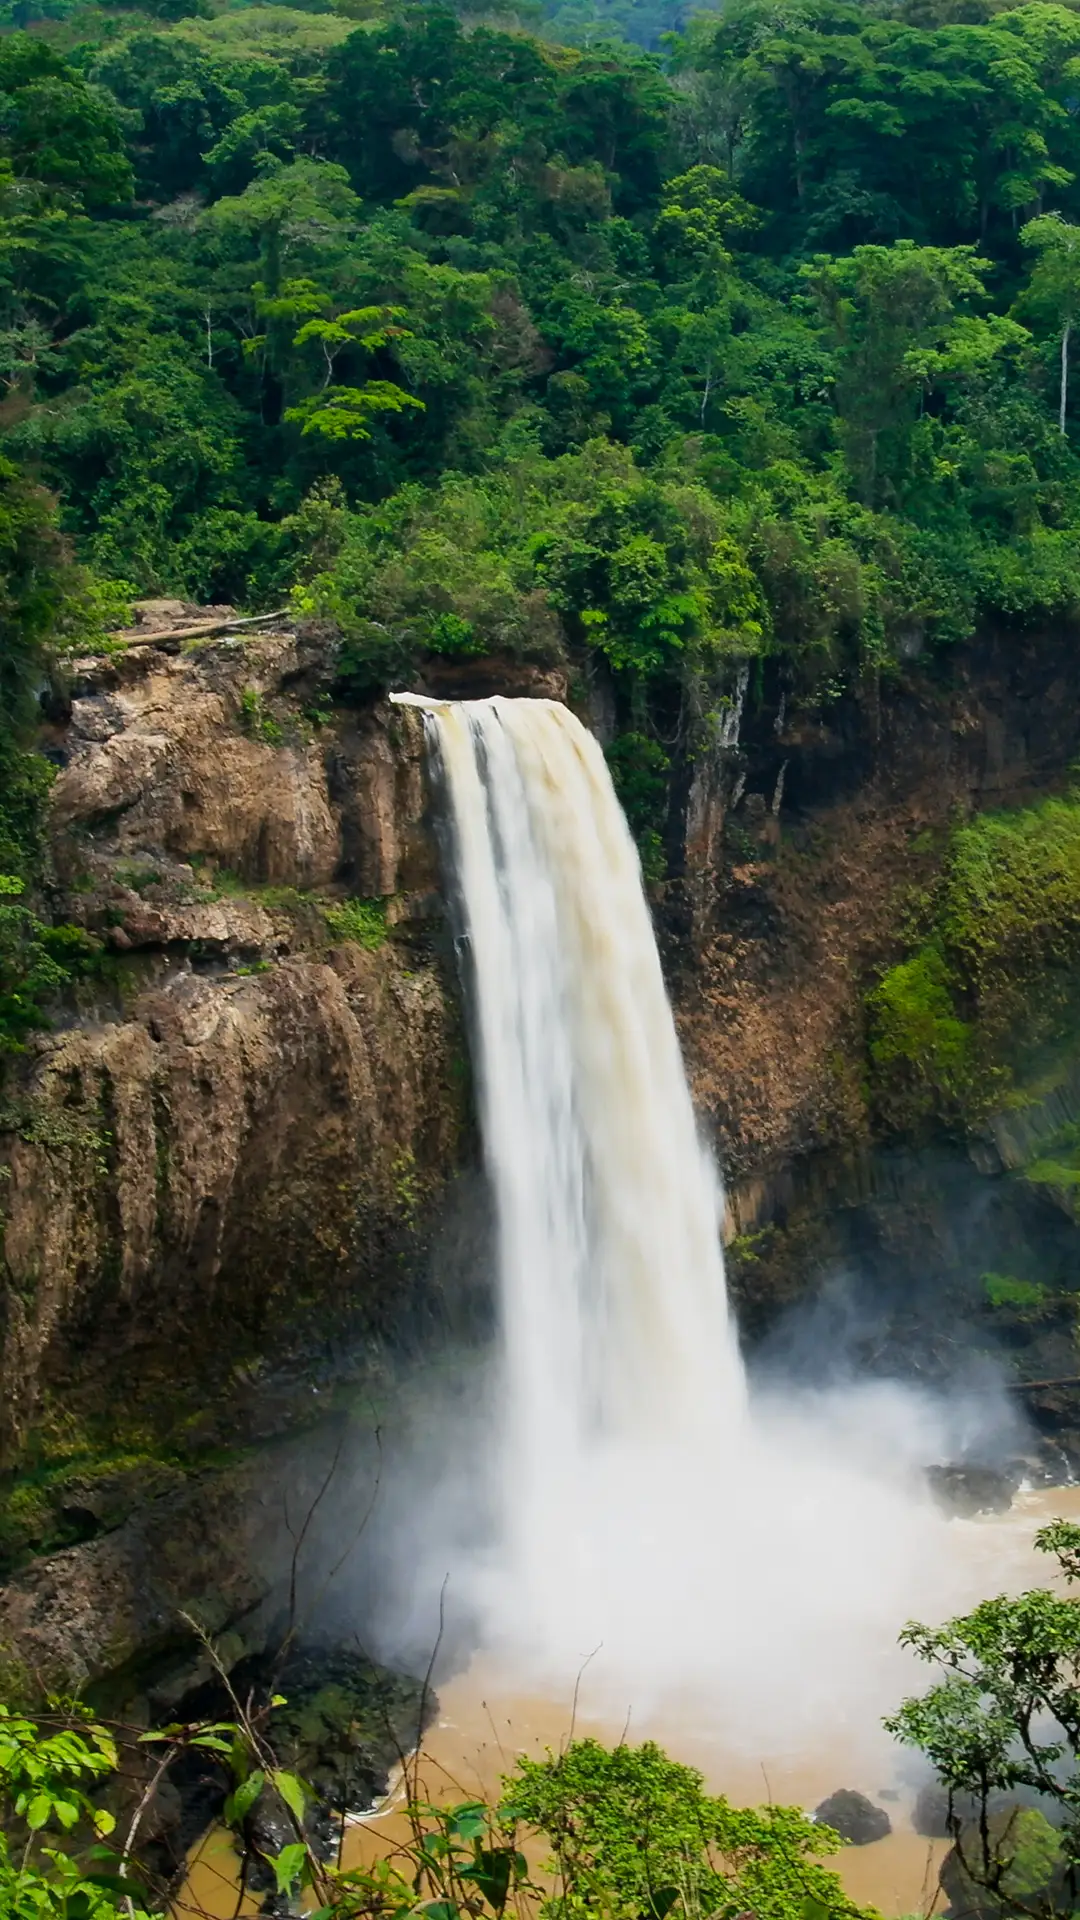 Panorama of main cascade of Ekom waterfall at Nkam river, Cameroon.